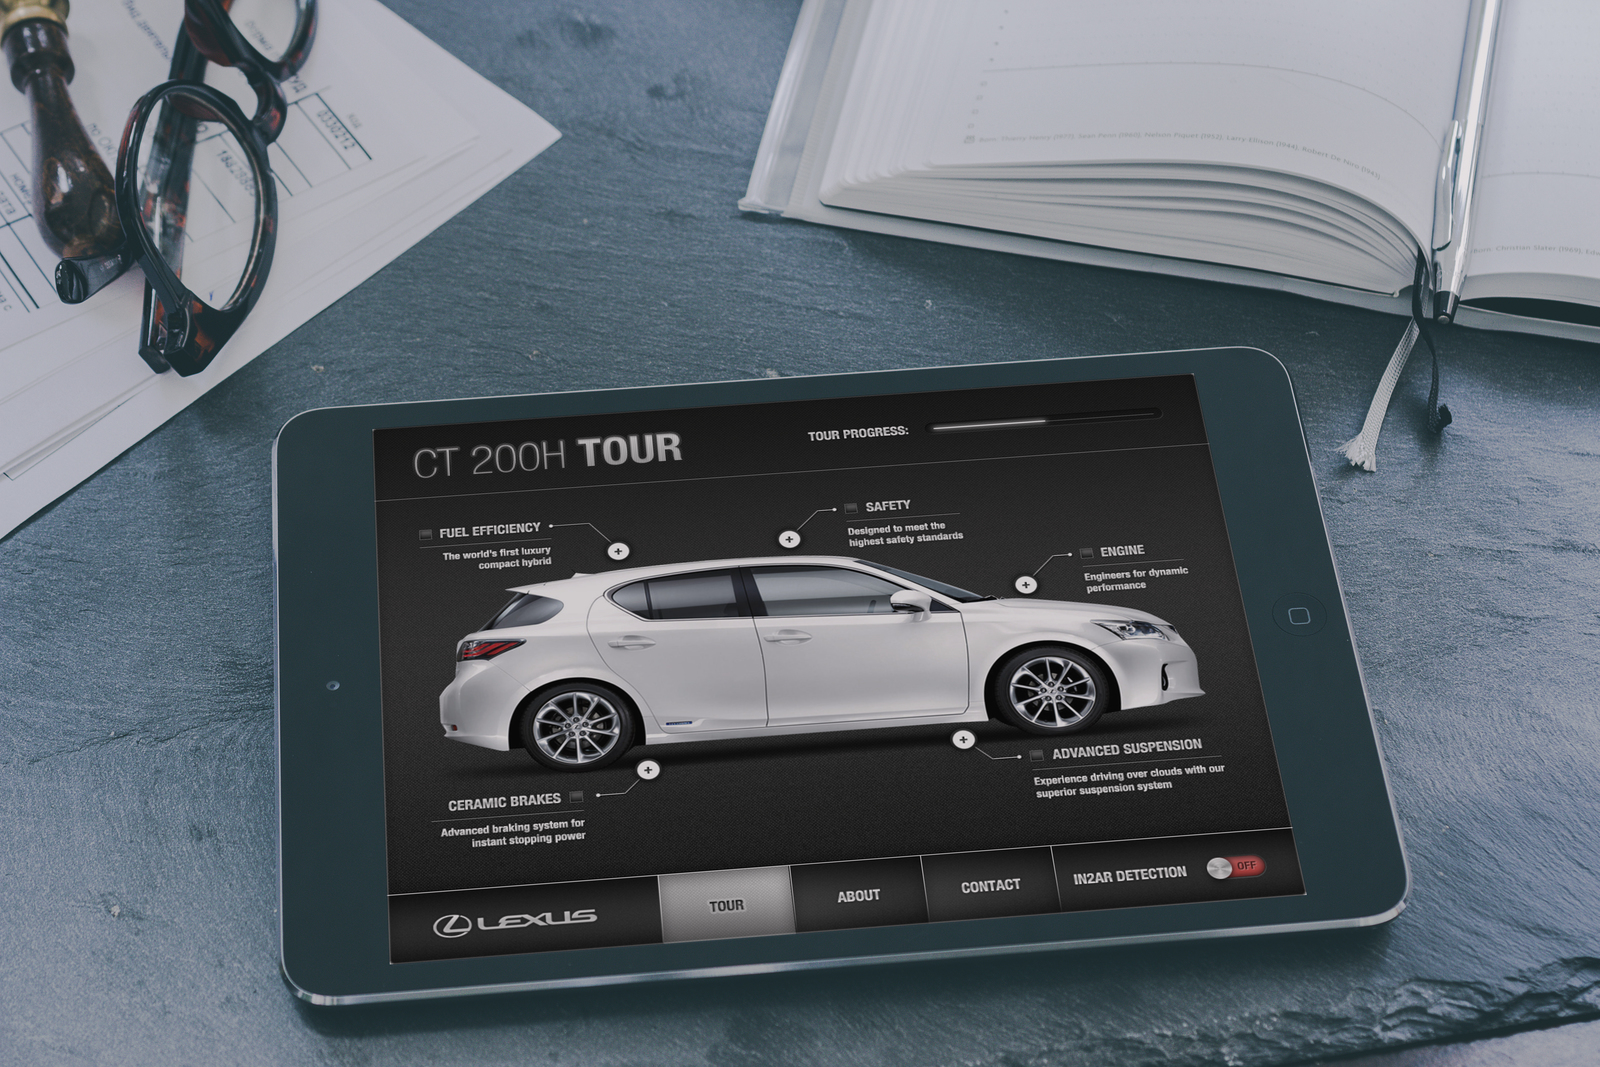 Lexus mobile sales assistant and marketing app